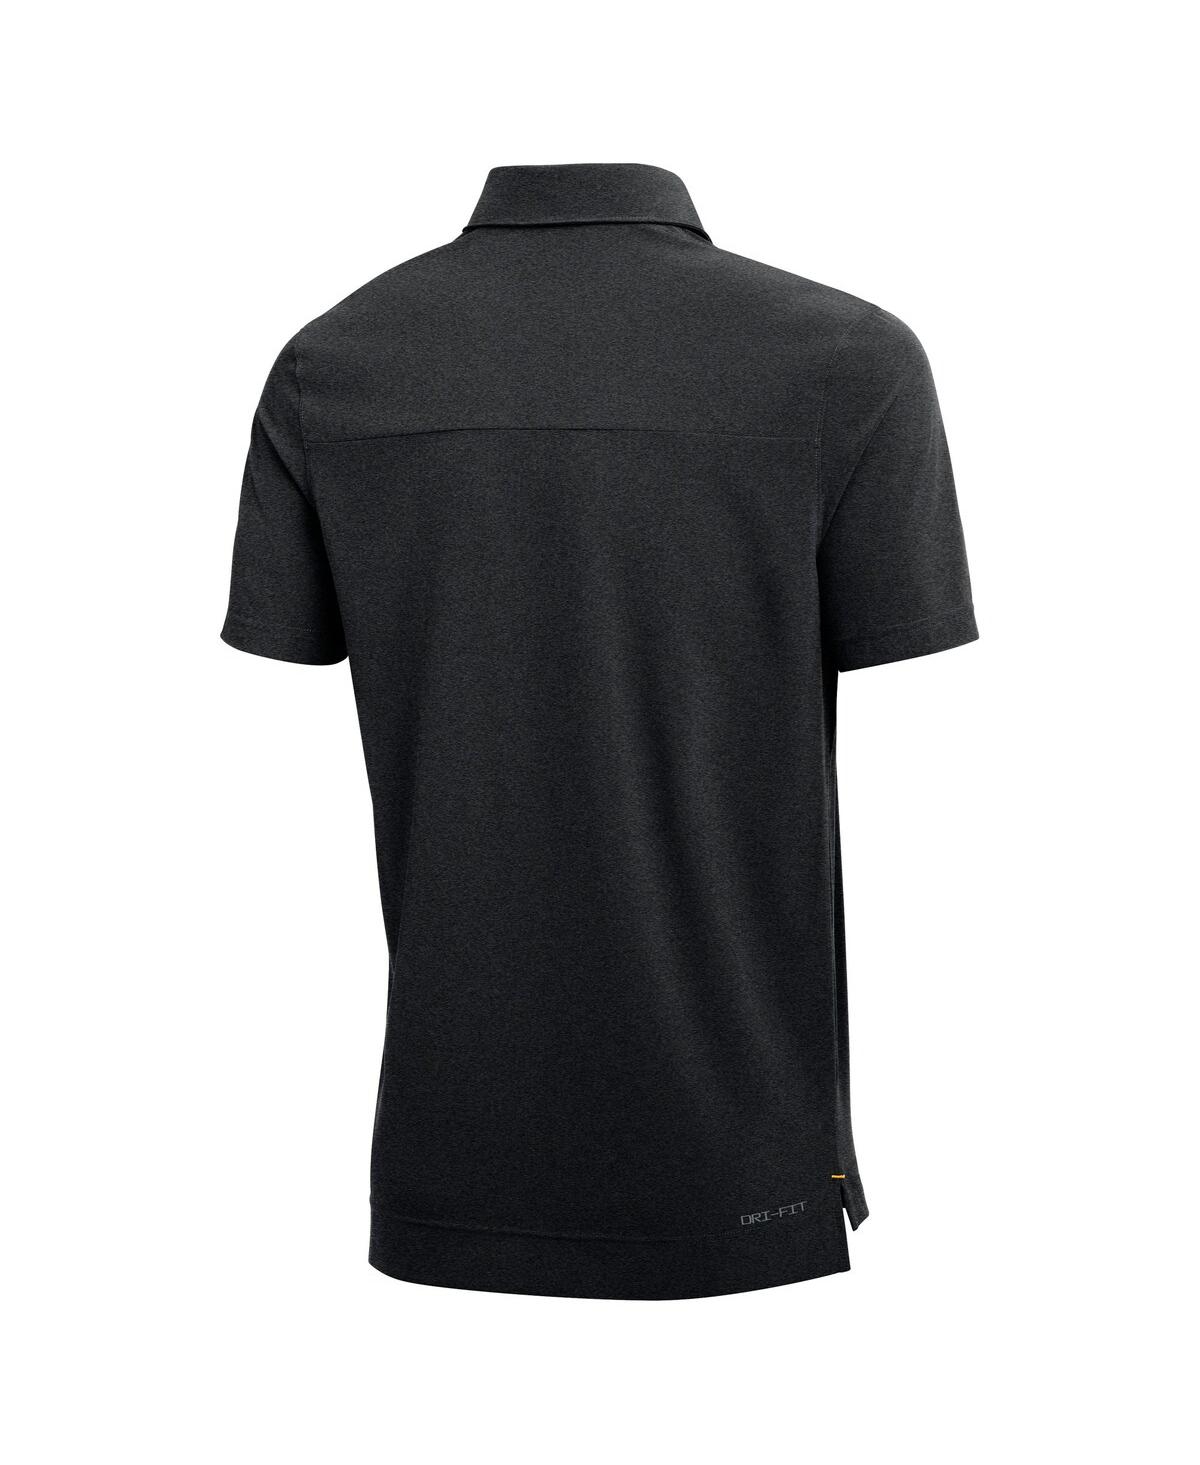 Shop Nike Men's  Heathered Black Iowa Hawkeyes 2022 Coach Performance Polo Shirt